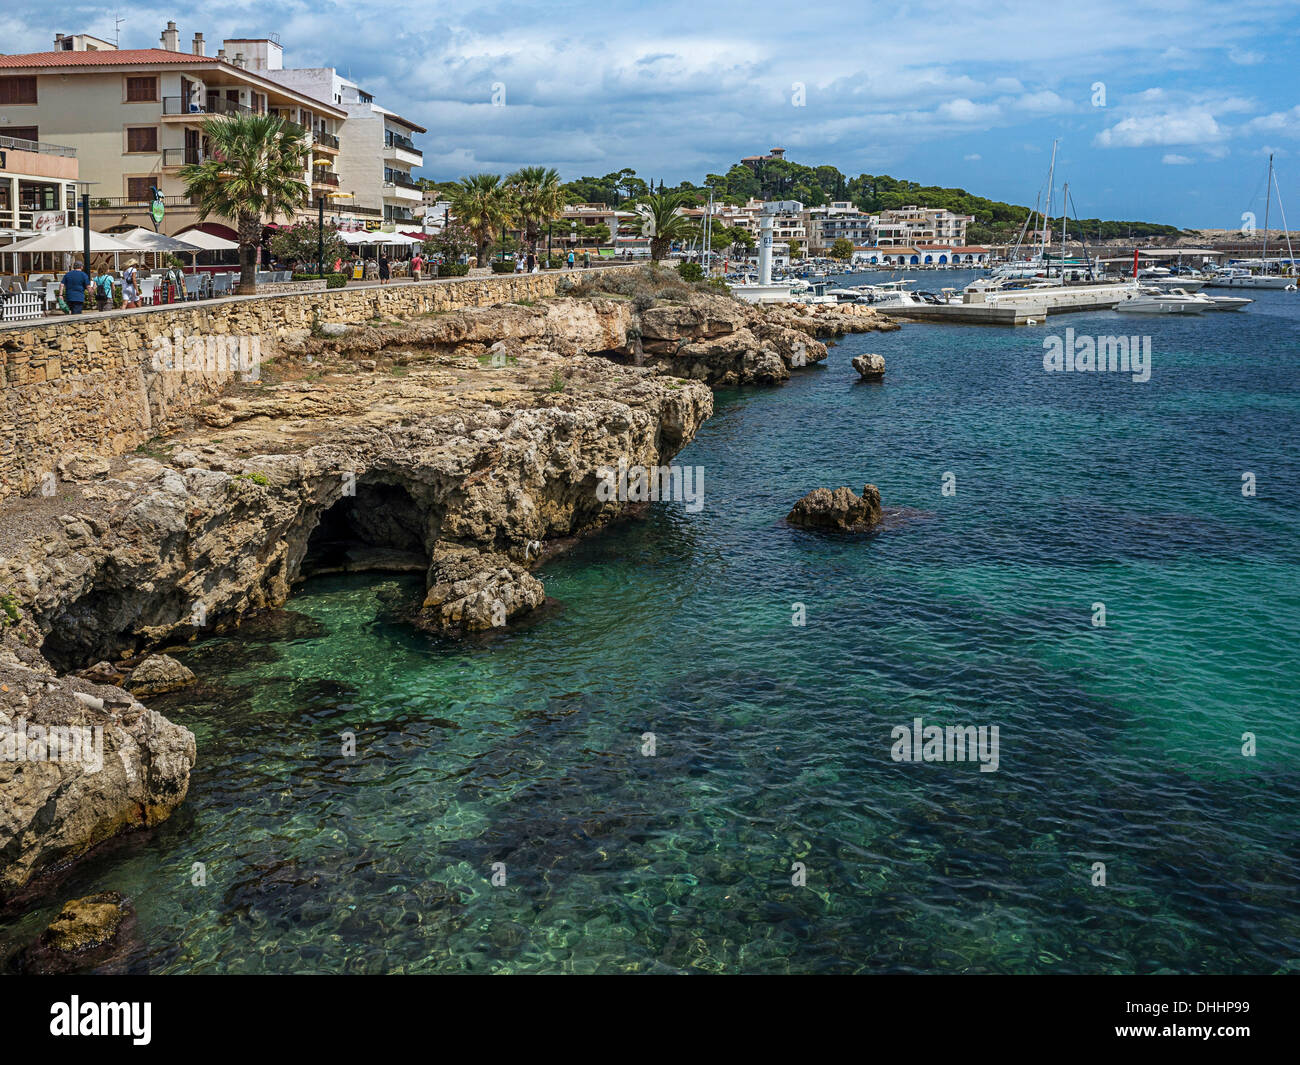 Promenade on the coast, Cala Rajada, Majorca, Balearic Islands, Spain Stock Photo